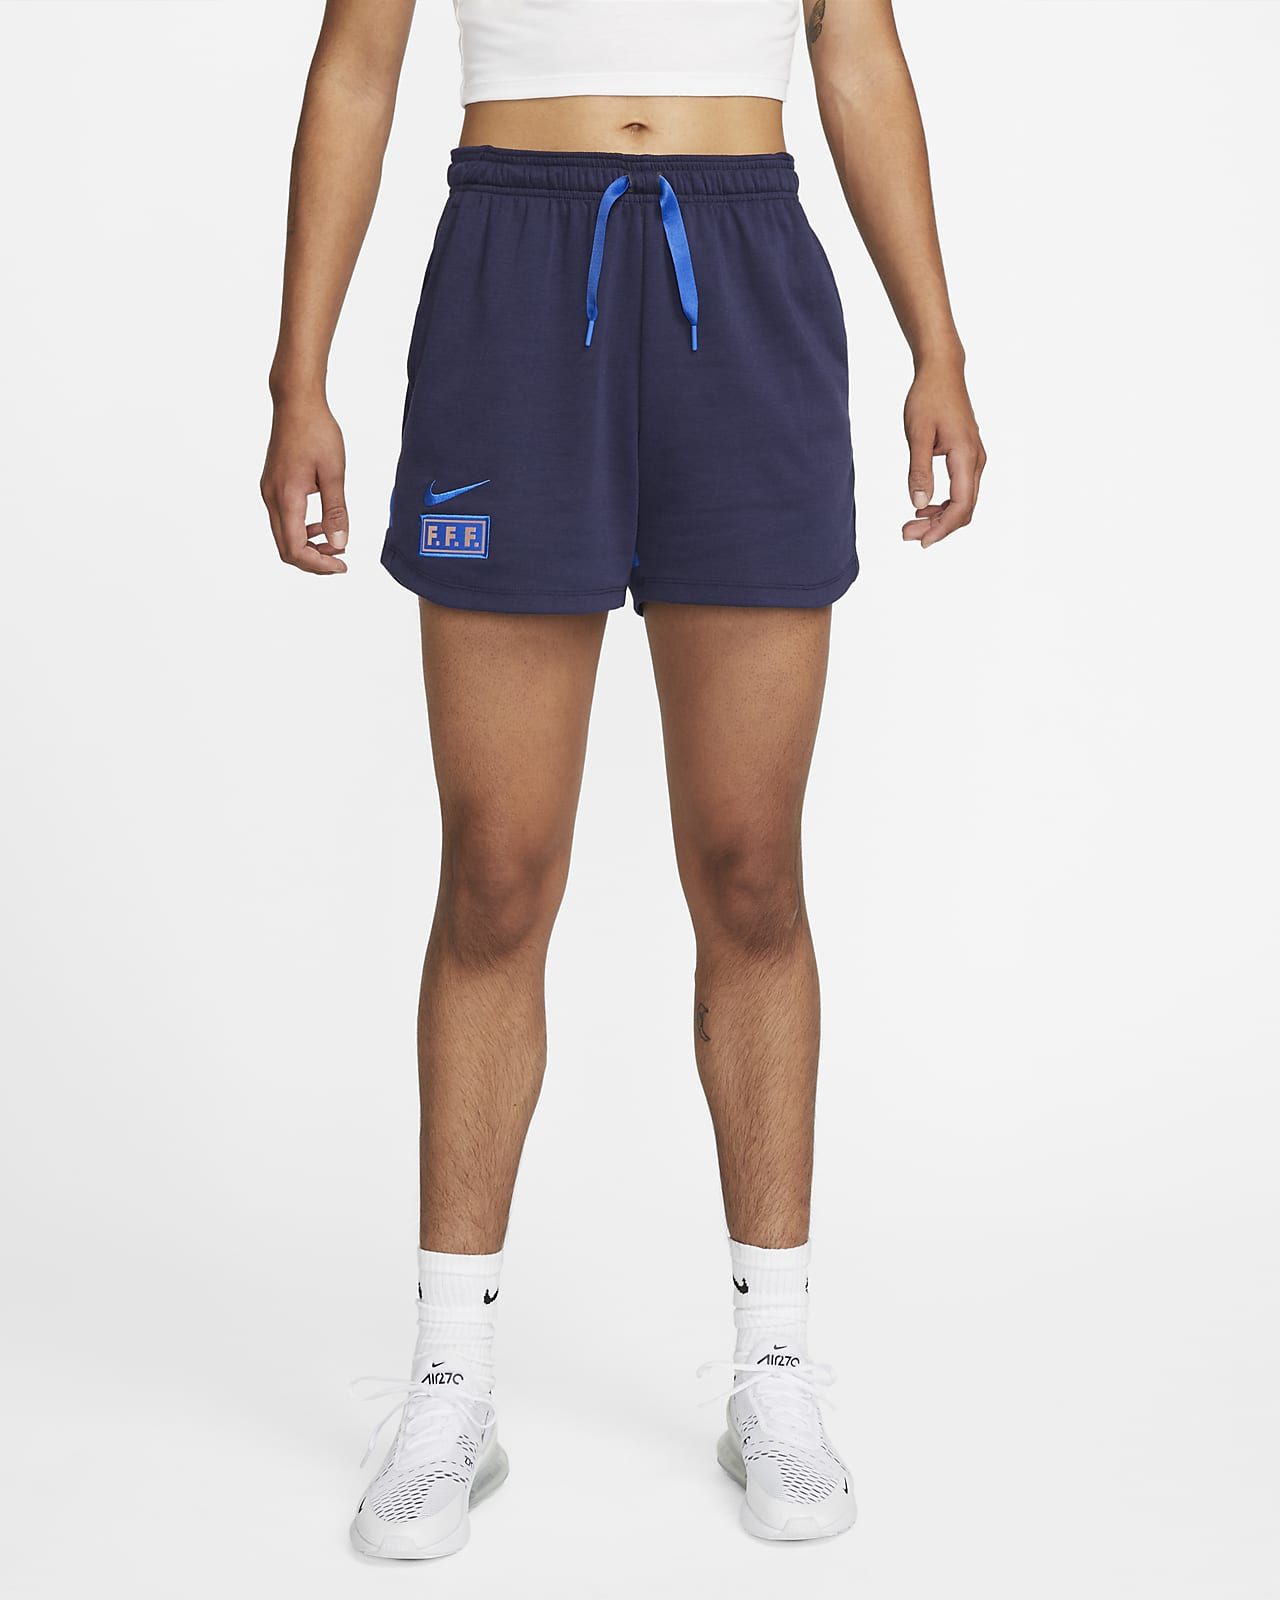 FFF Women's Knit Football Shorts